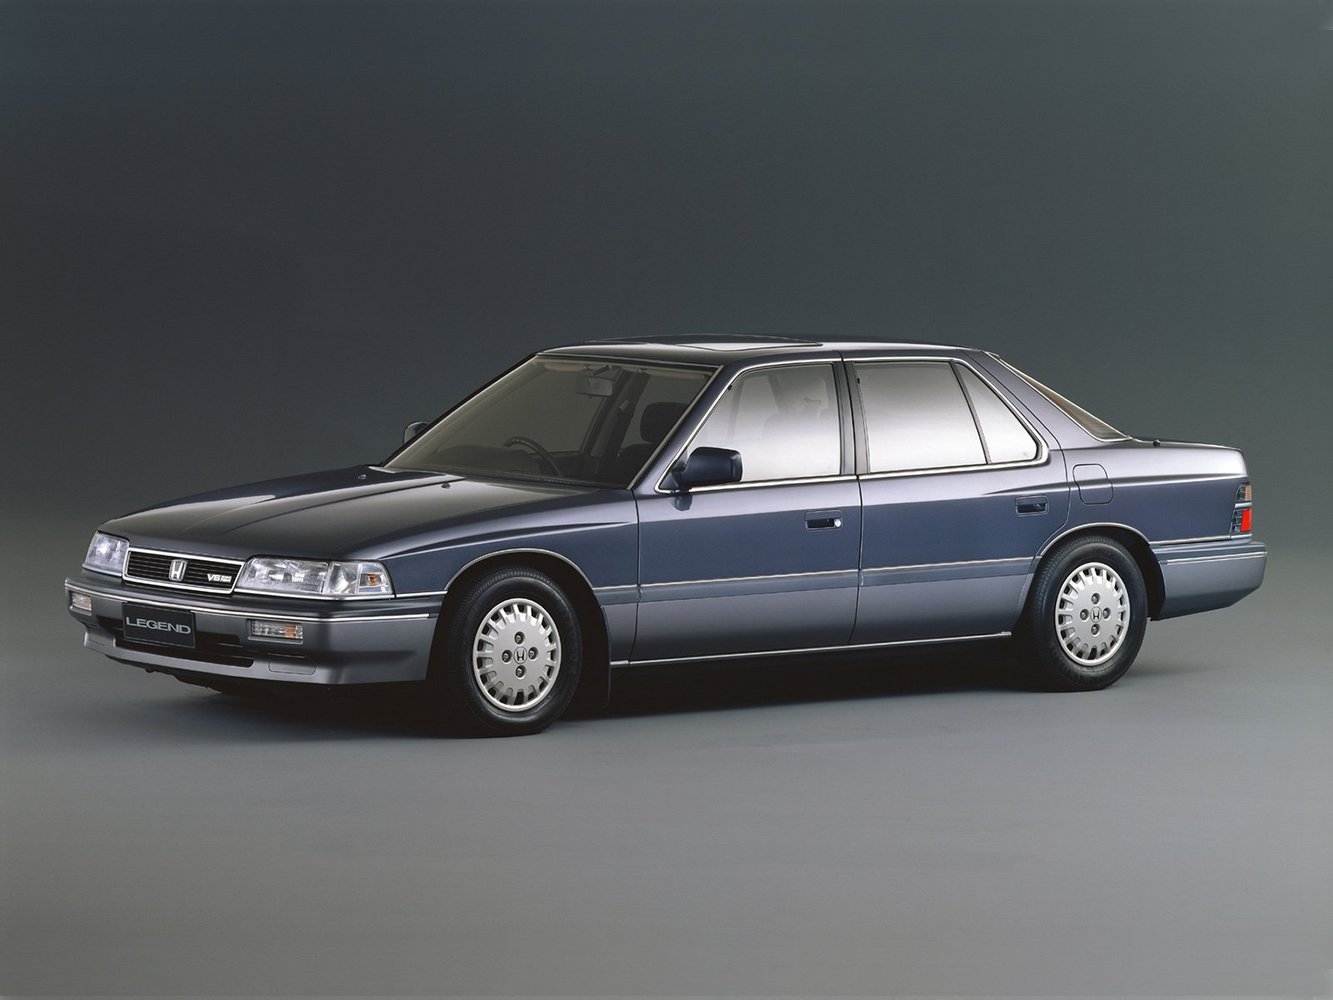 седан Honda Legend 1986 - 1990г выпуска модификация 2.0 AT (145 л.с.)